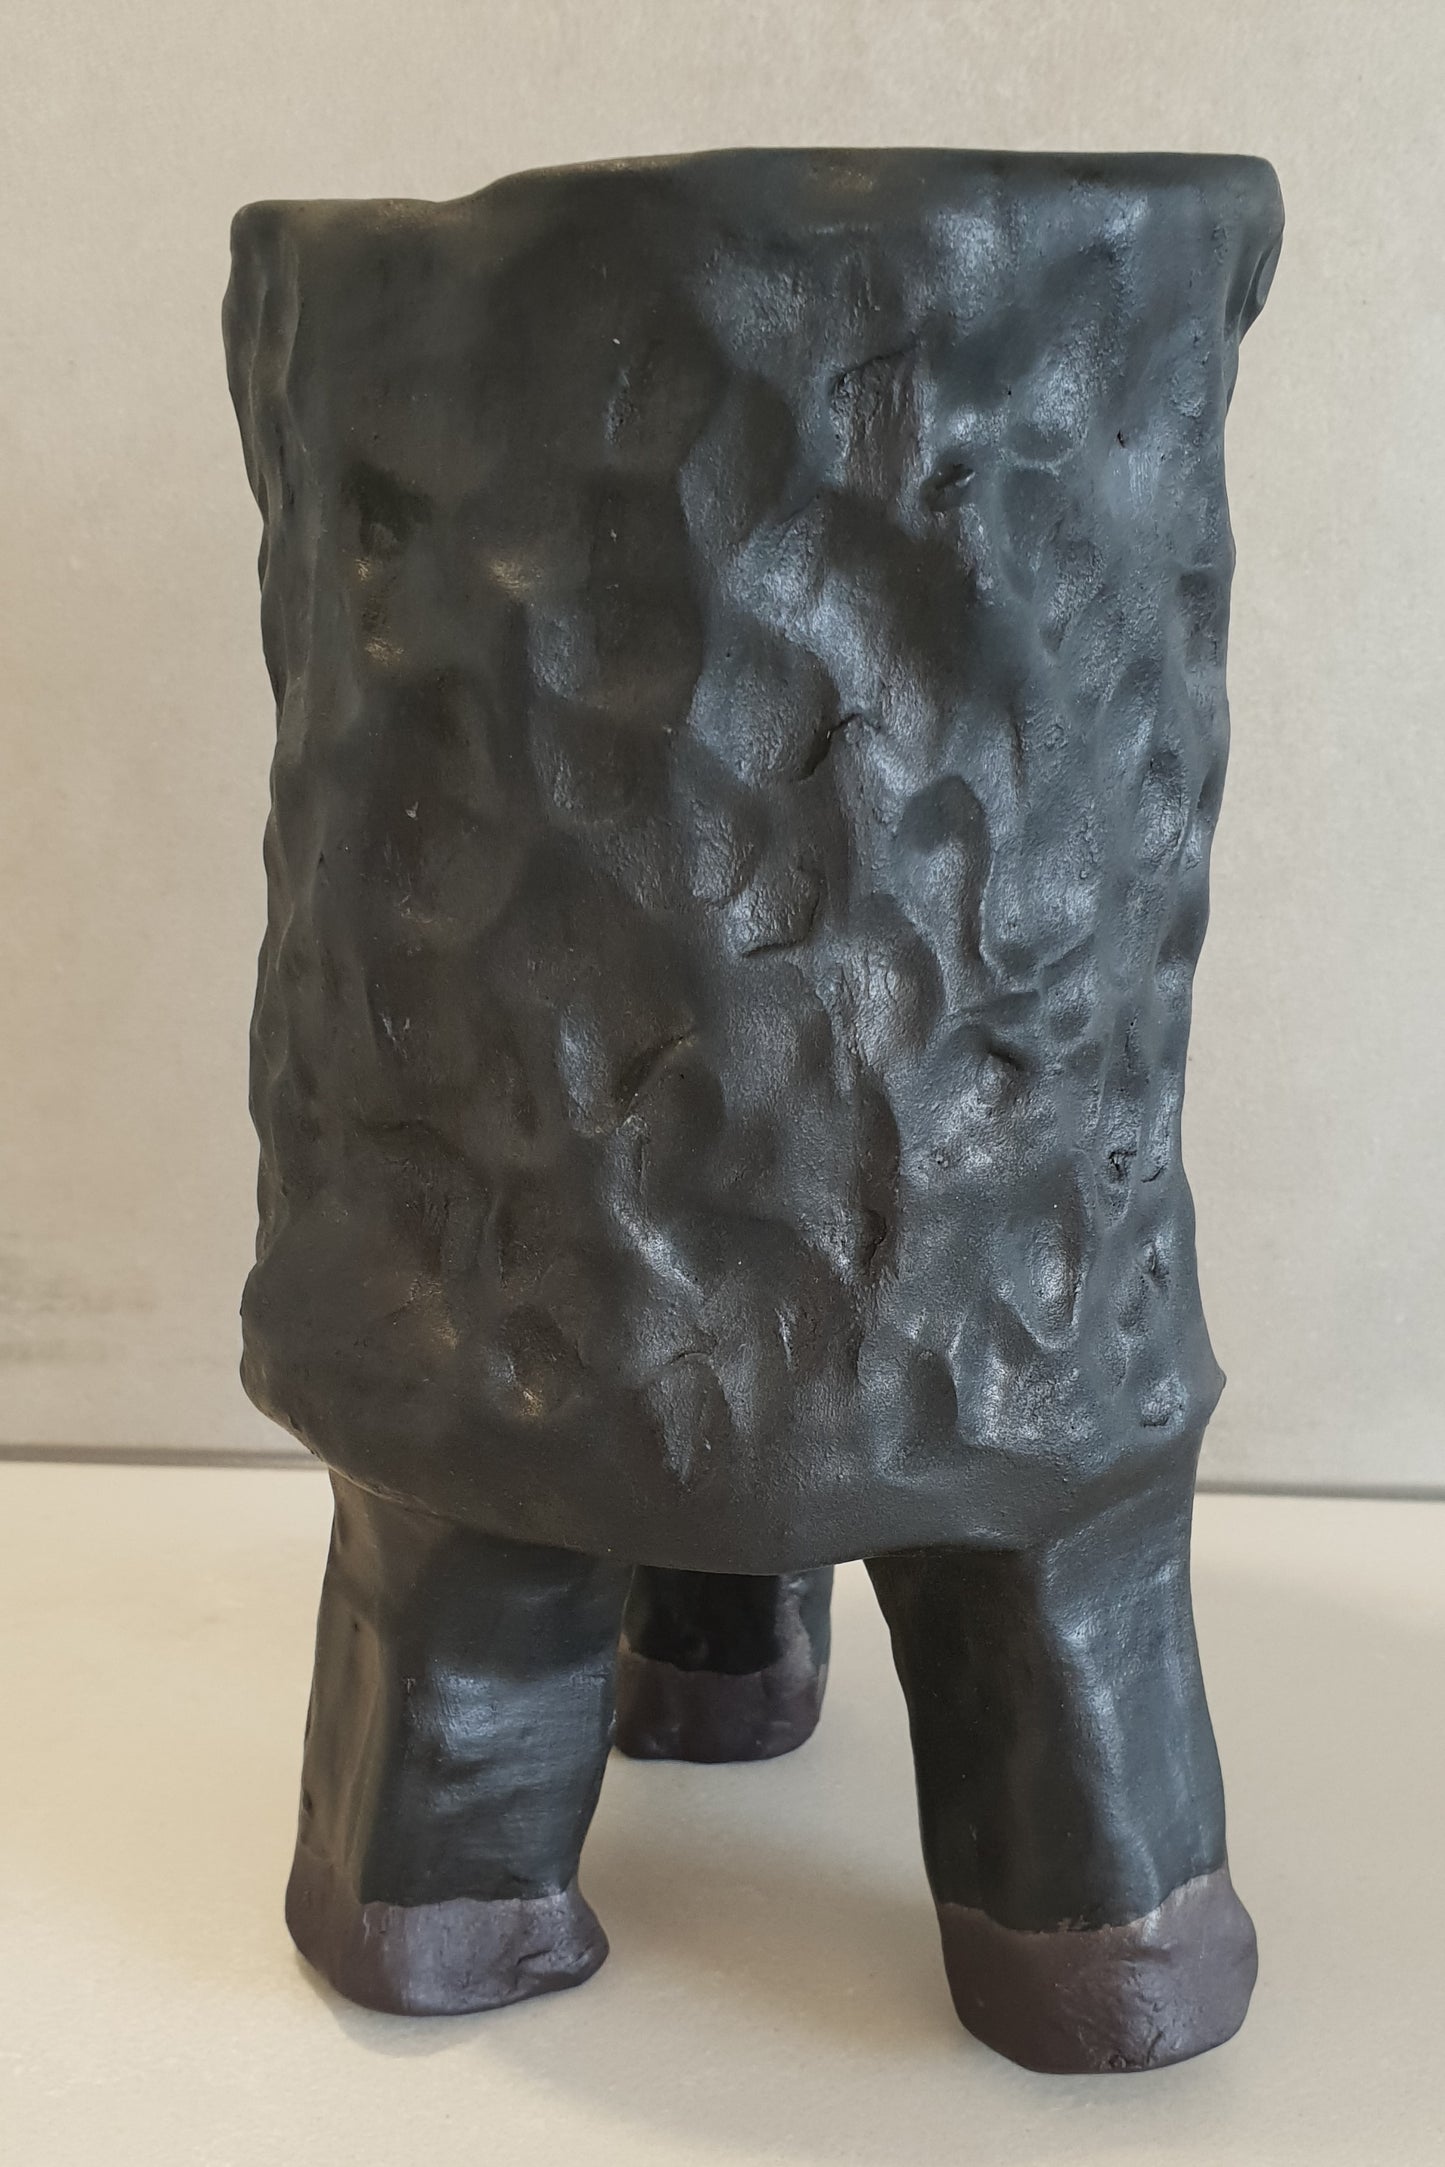 Matt black vase with stand